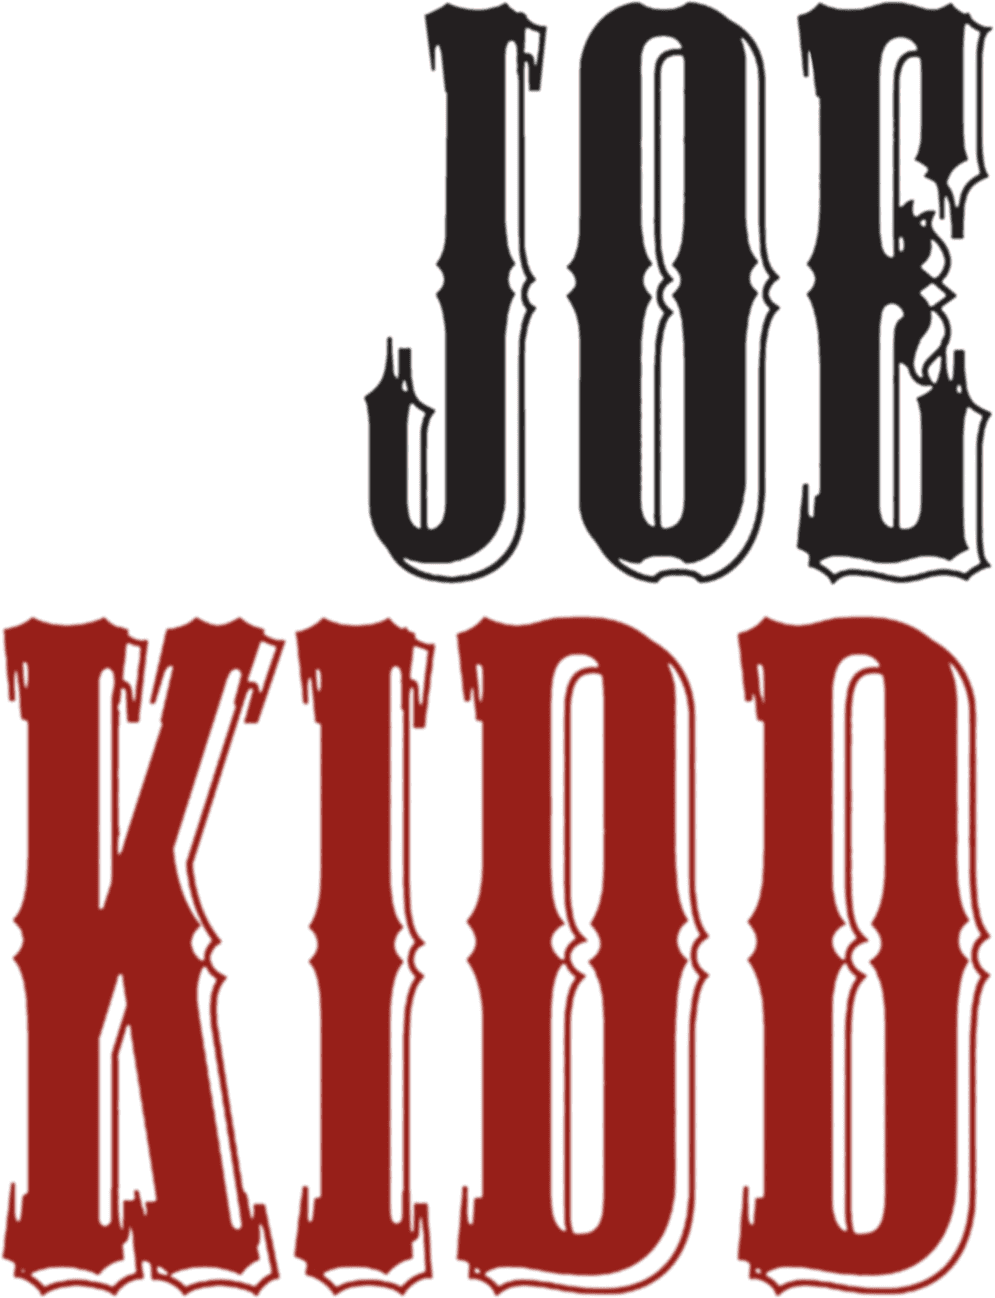 Joe Kidd logo